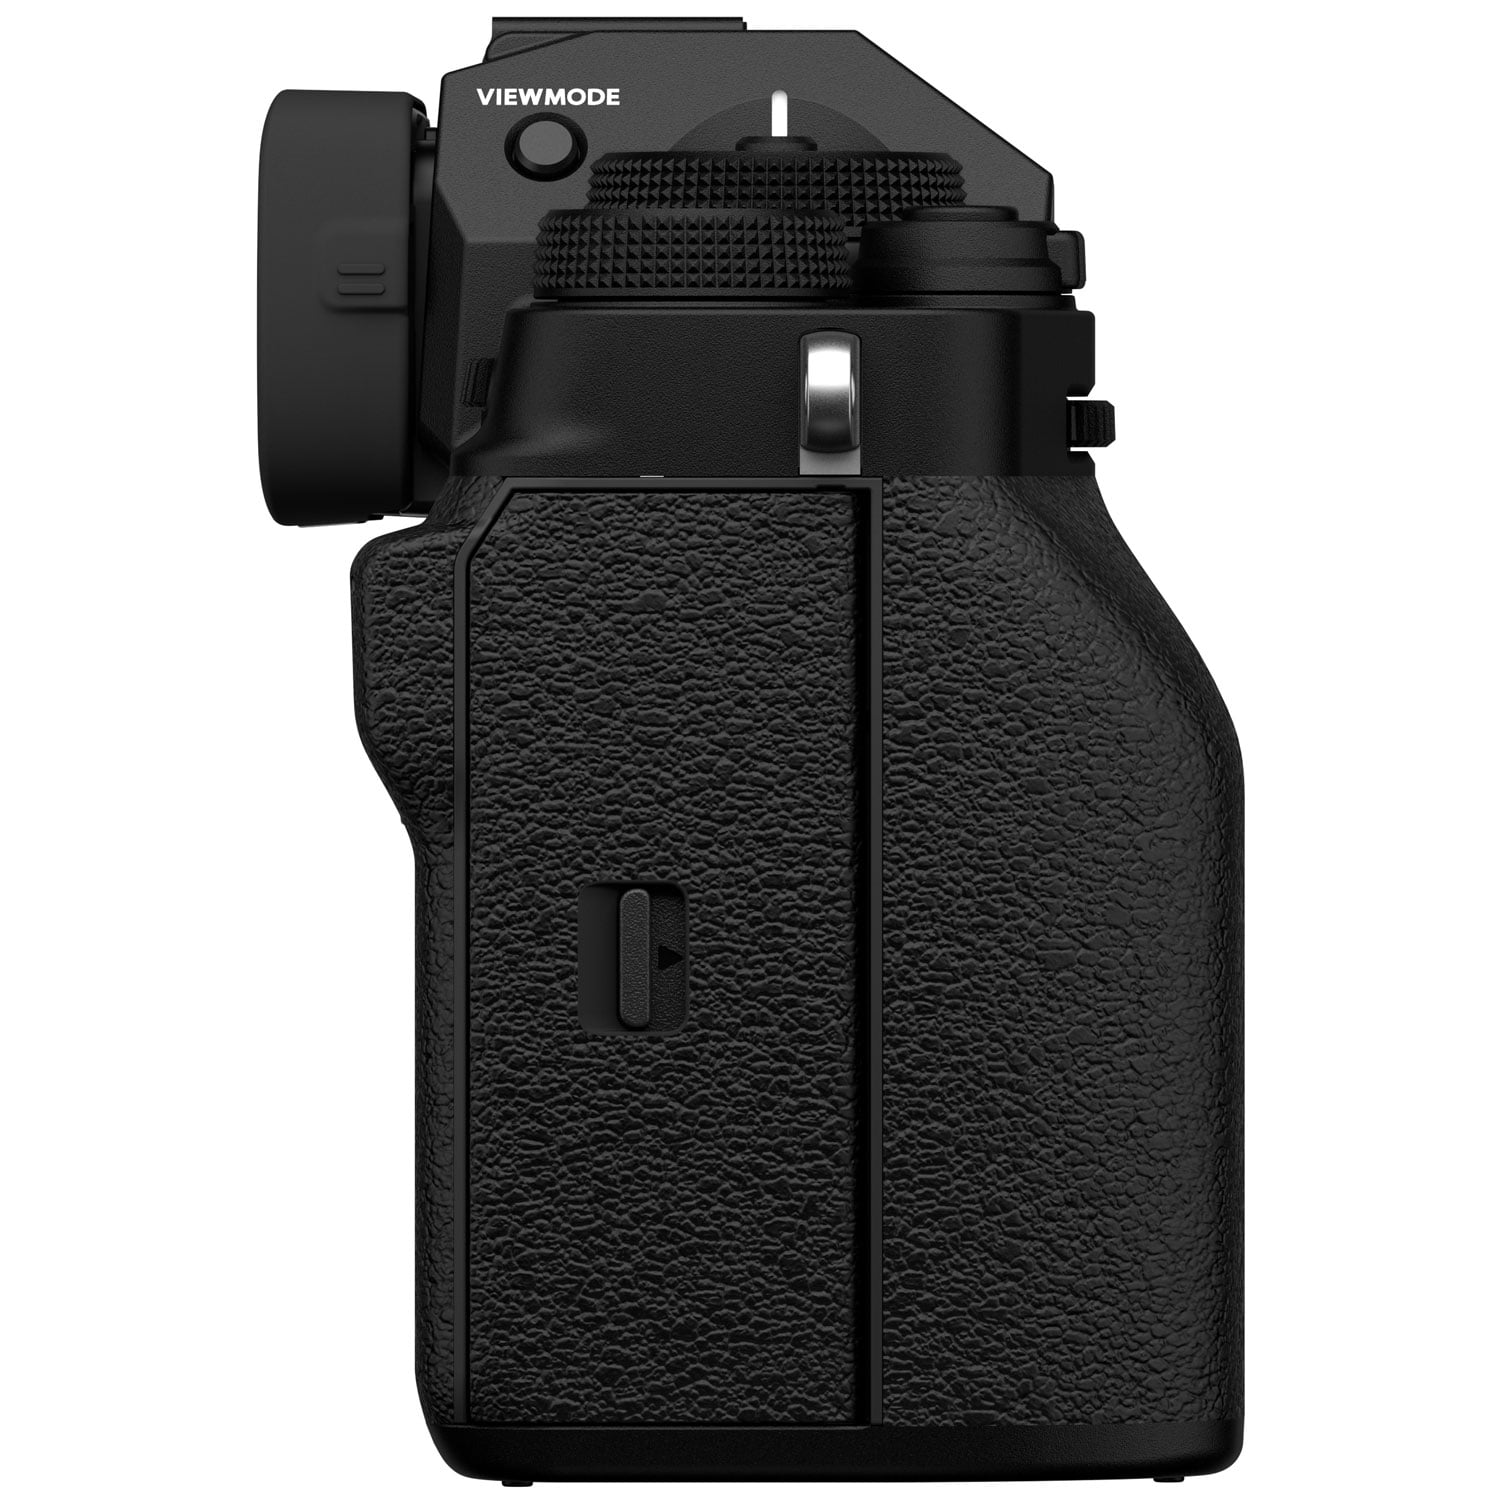 Fujifilm X-T4 26.1MP 4K HD Mirrorless Digital Camera, Black (Body Only) -  16652855